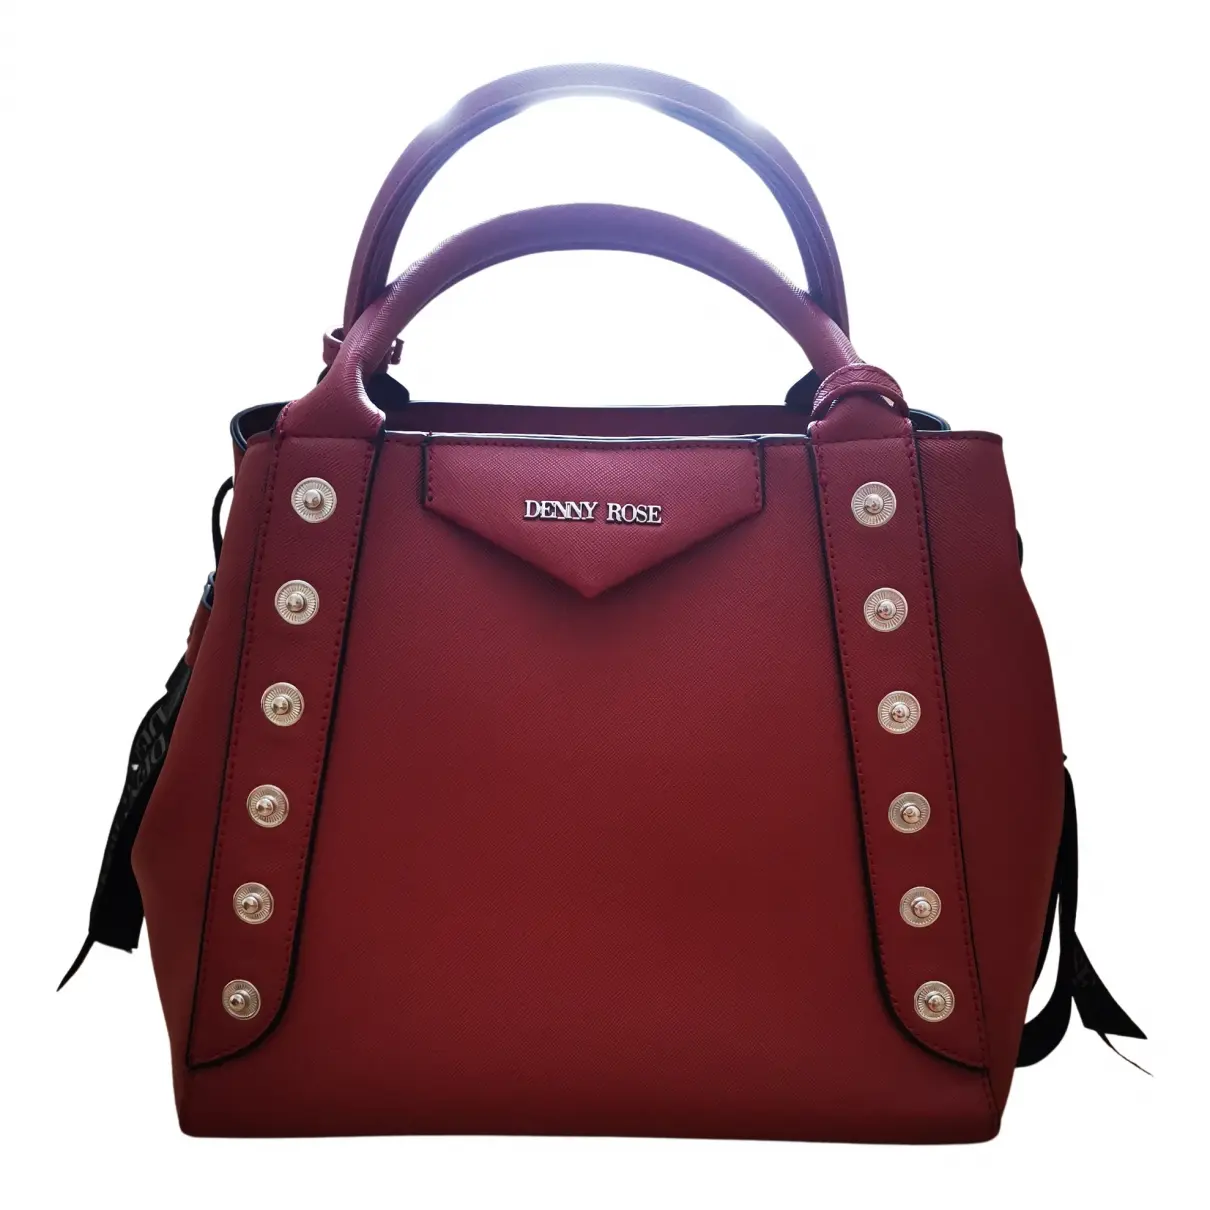 Leather handbag DENNY ROSE